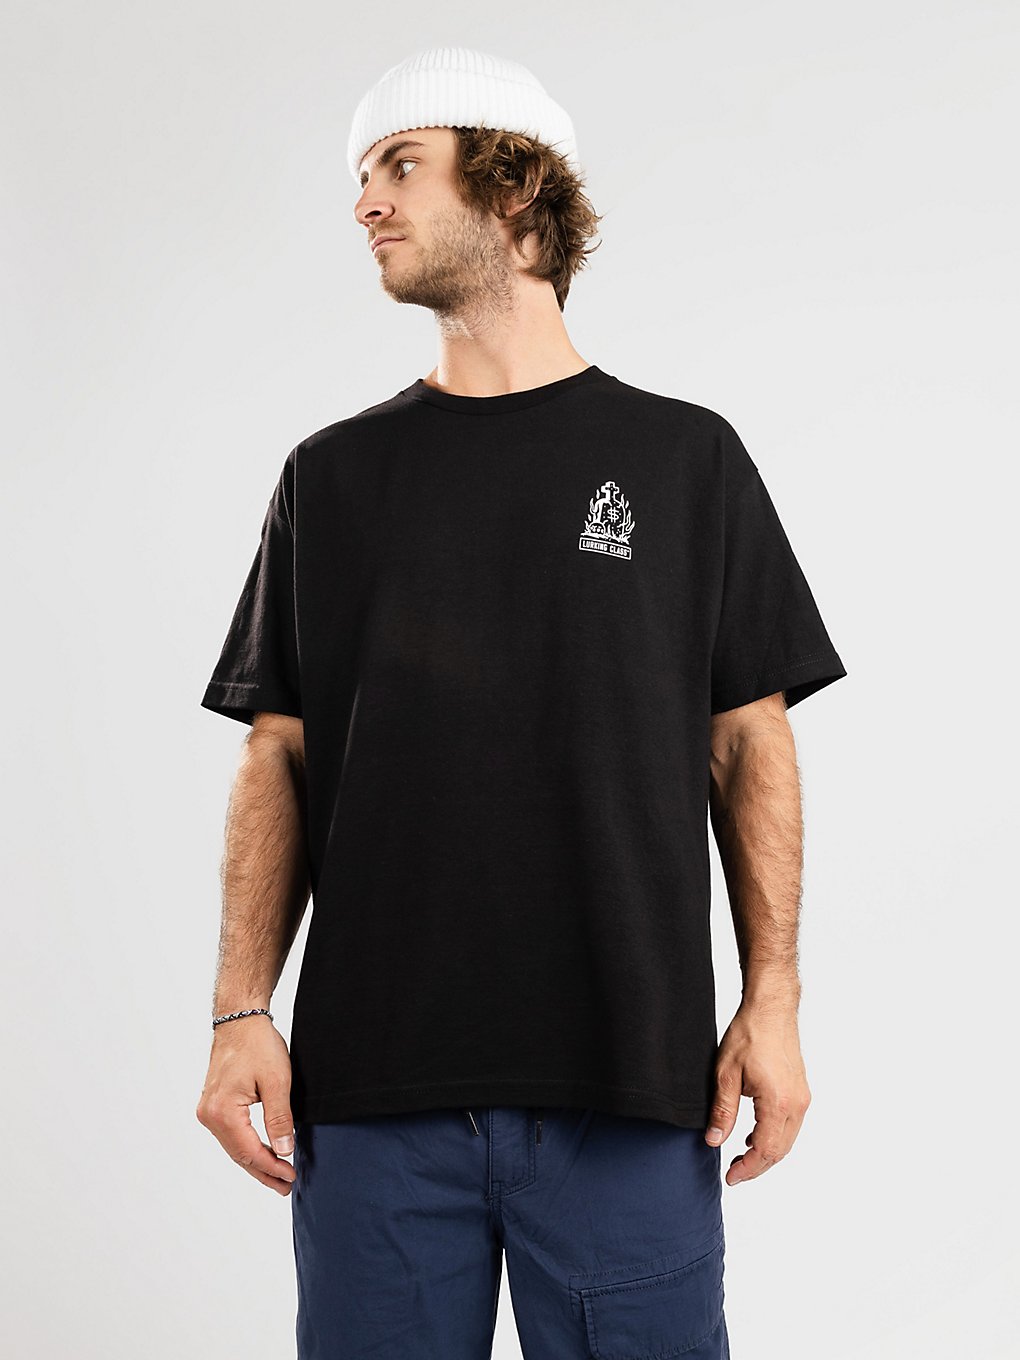 Lurking Class Want Less T-Shirt black kaufen